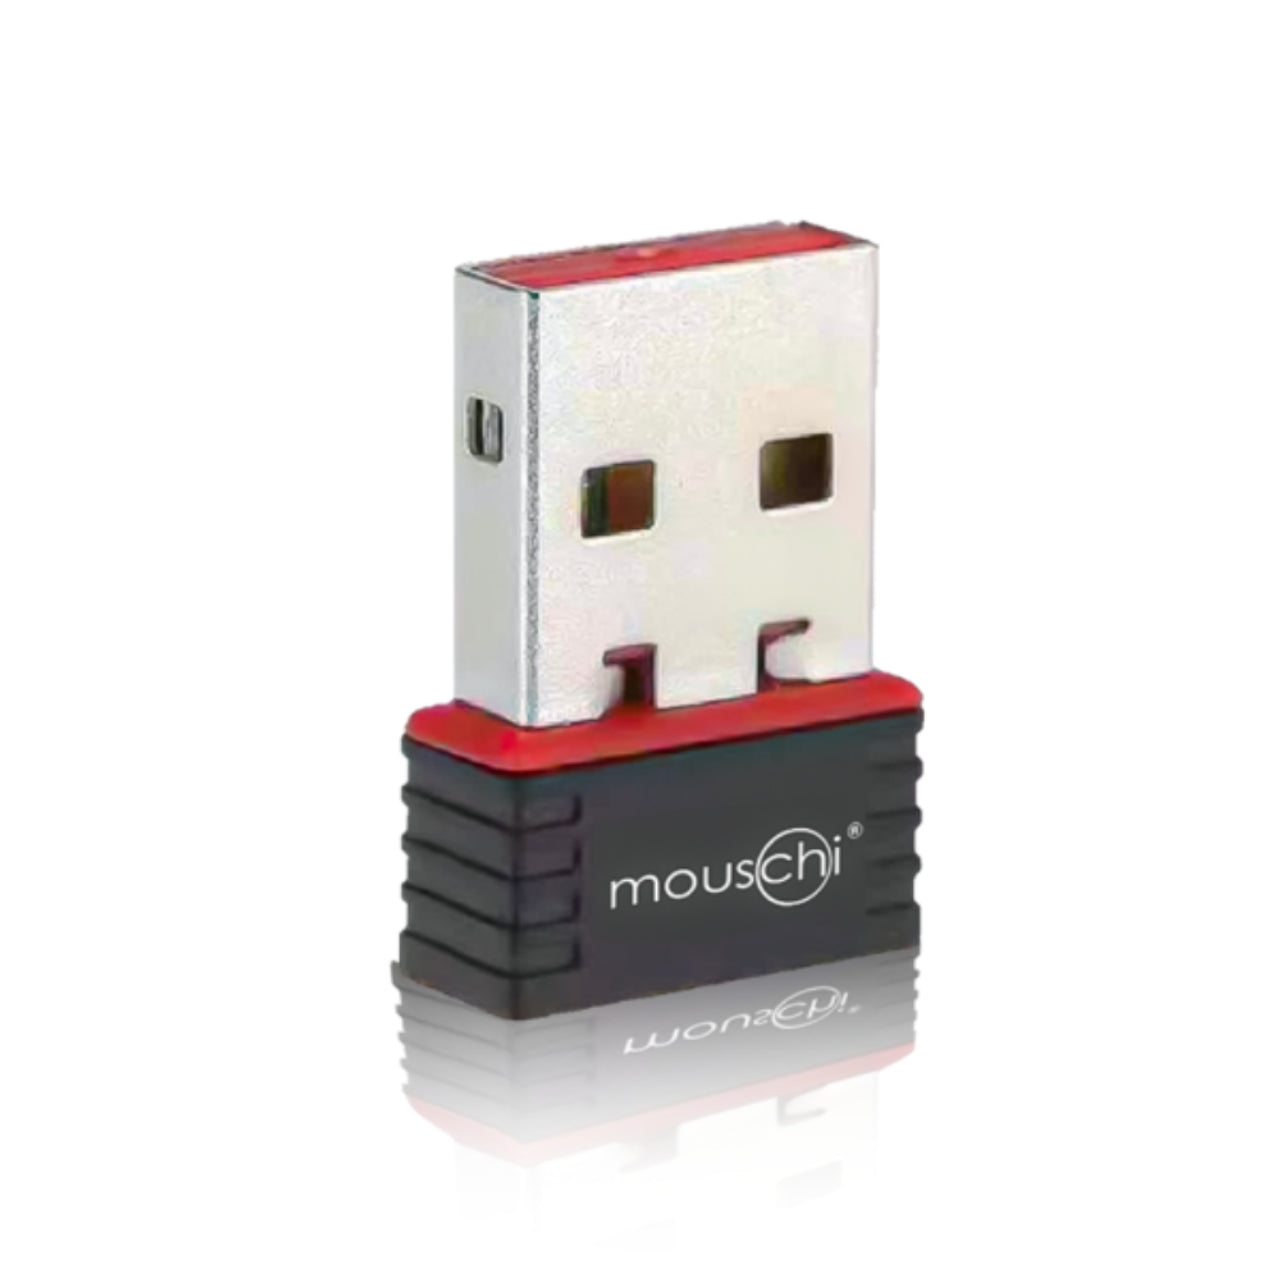 MOUSCHI USB 2.0 WIRELESS 300MBPS 802.11N